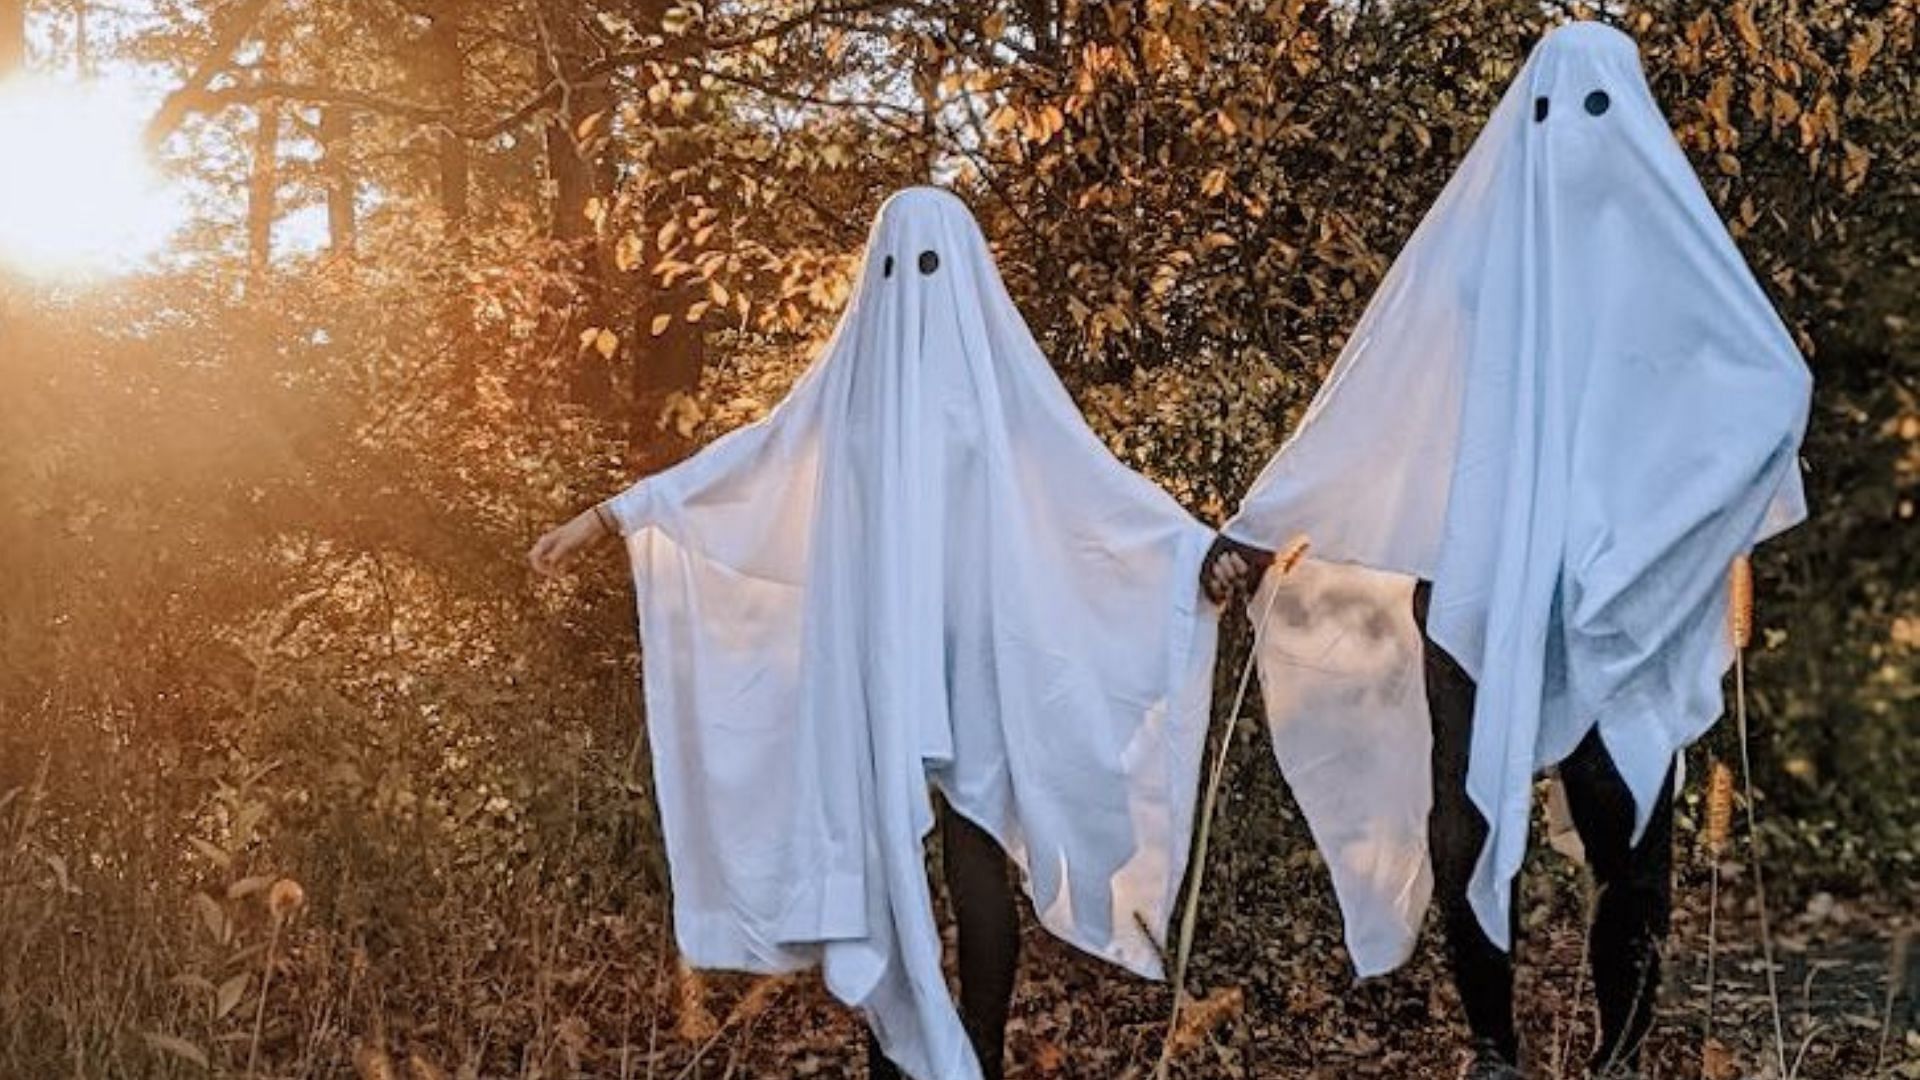 Halloween costumes (Image via Pinterest)